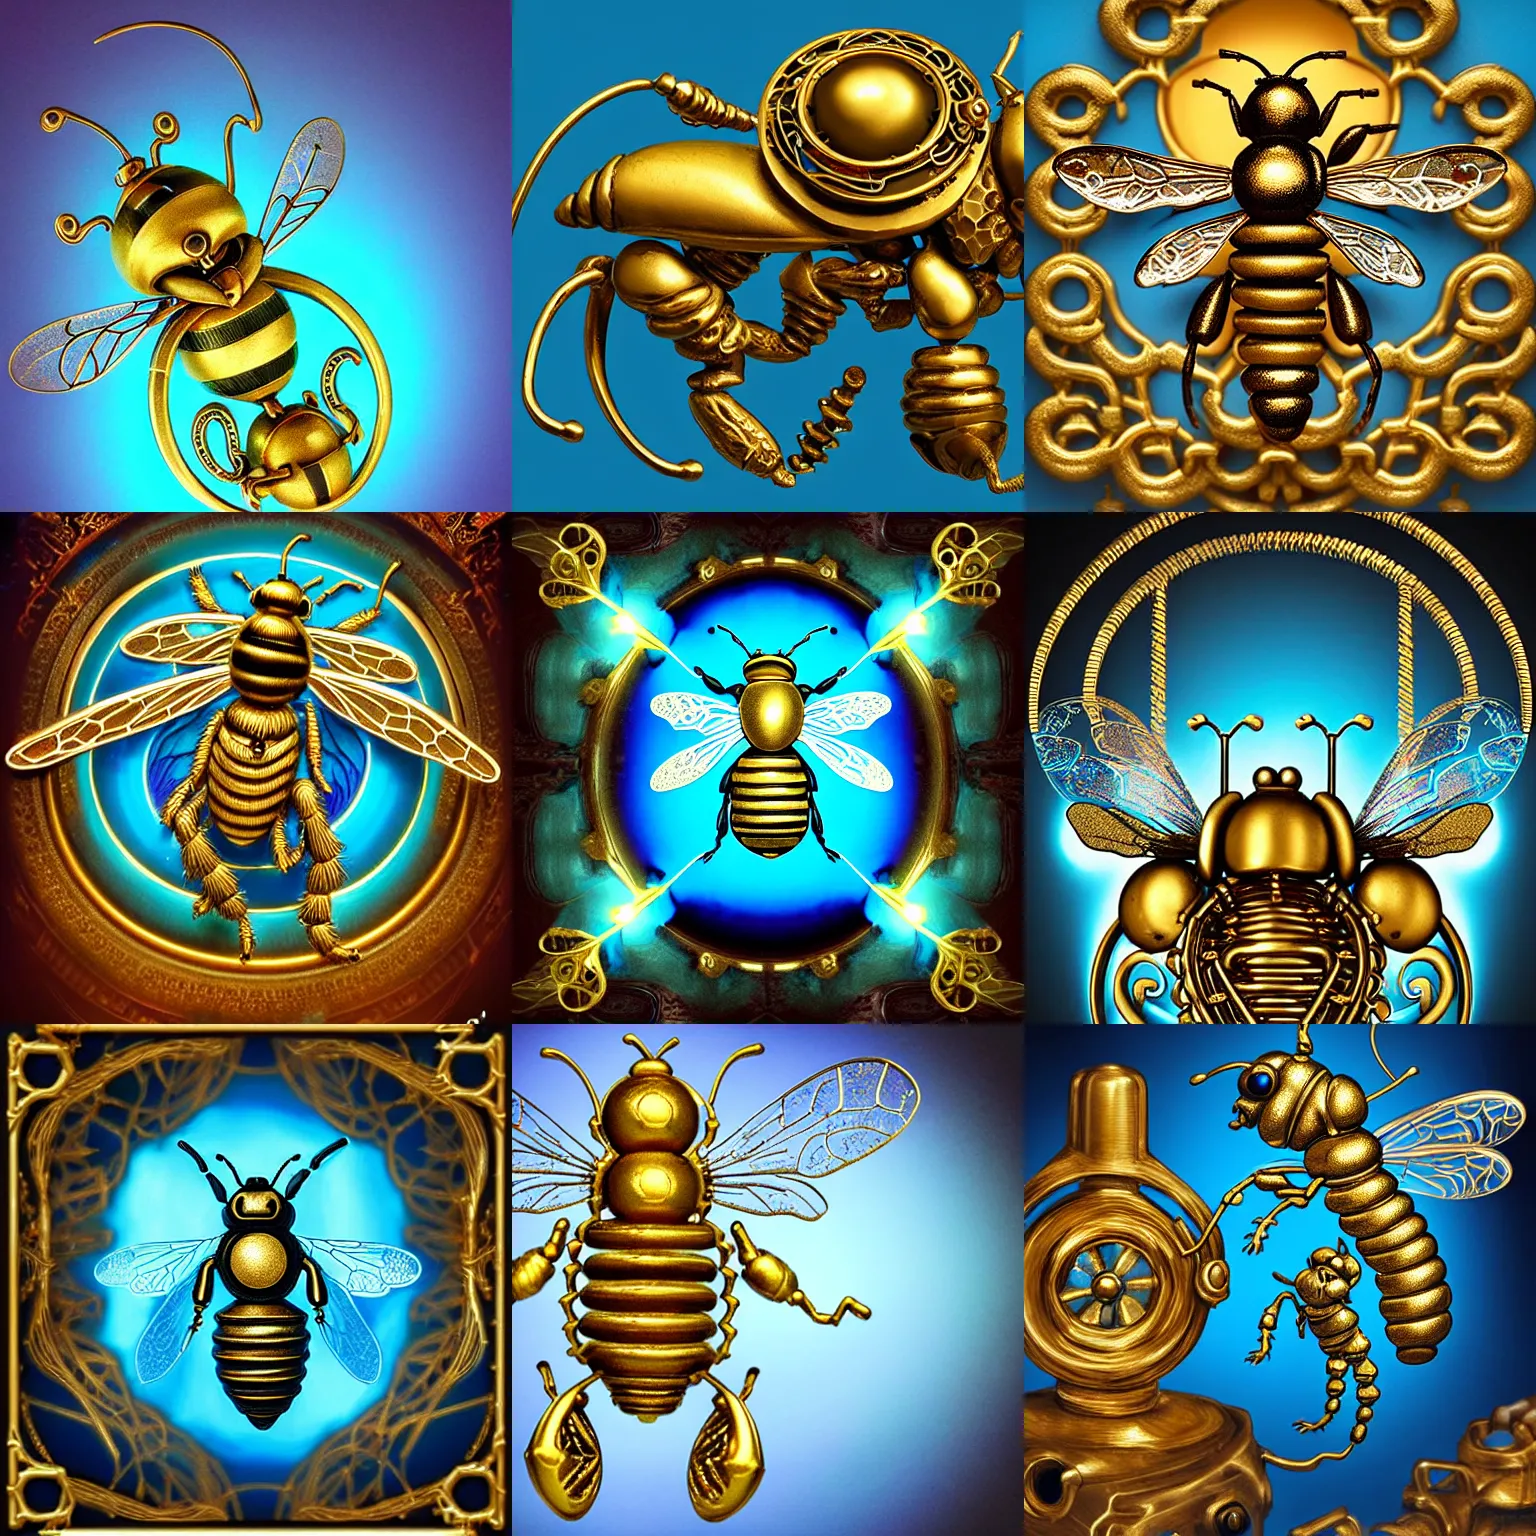 Prompt: Kaladesh digital art. Gold metal bee/rat mechanical homunculus invention, cute. Decorative flourish metalwork, heavy-gauge filigree, cogs, blown glass, glowing cyan blue plasma.